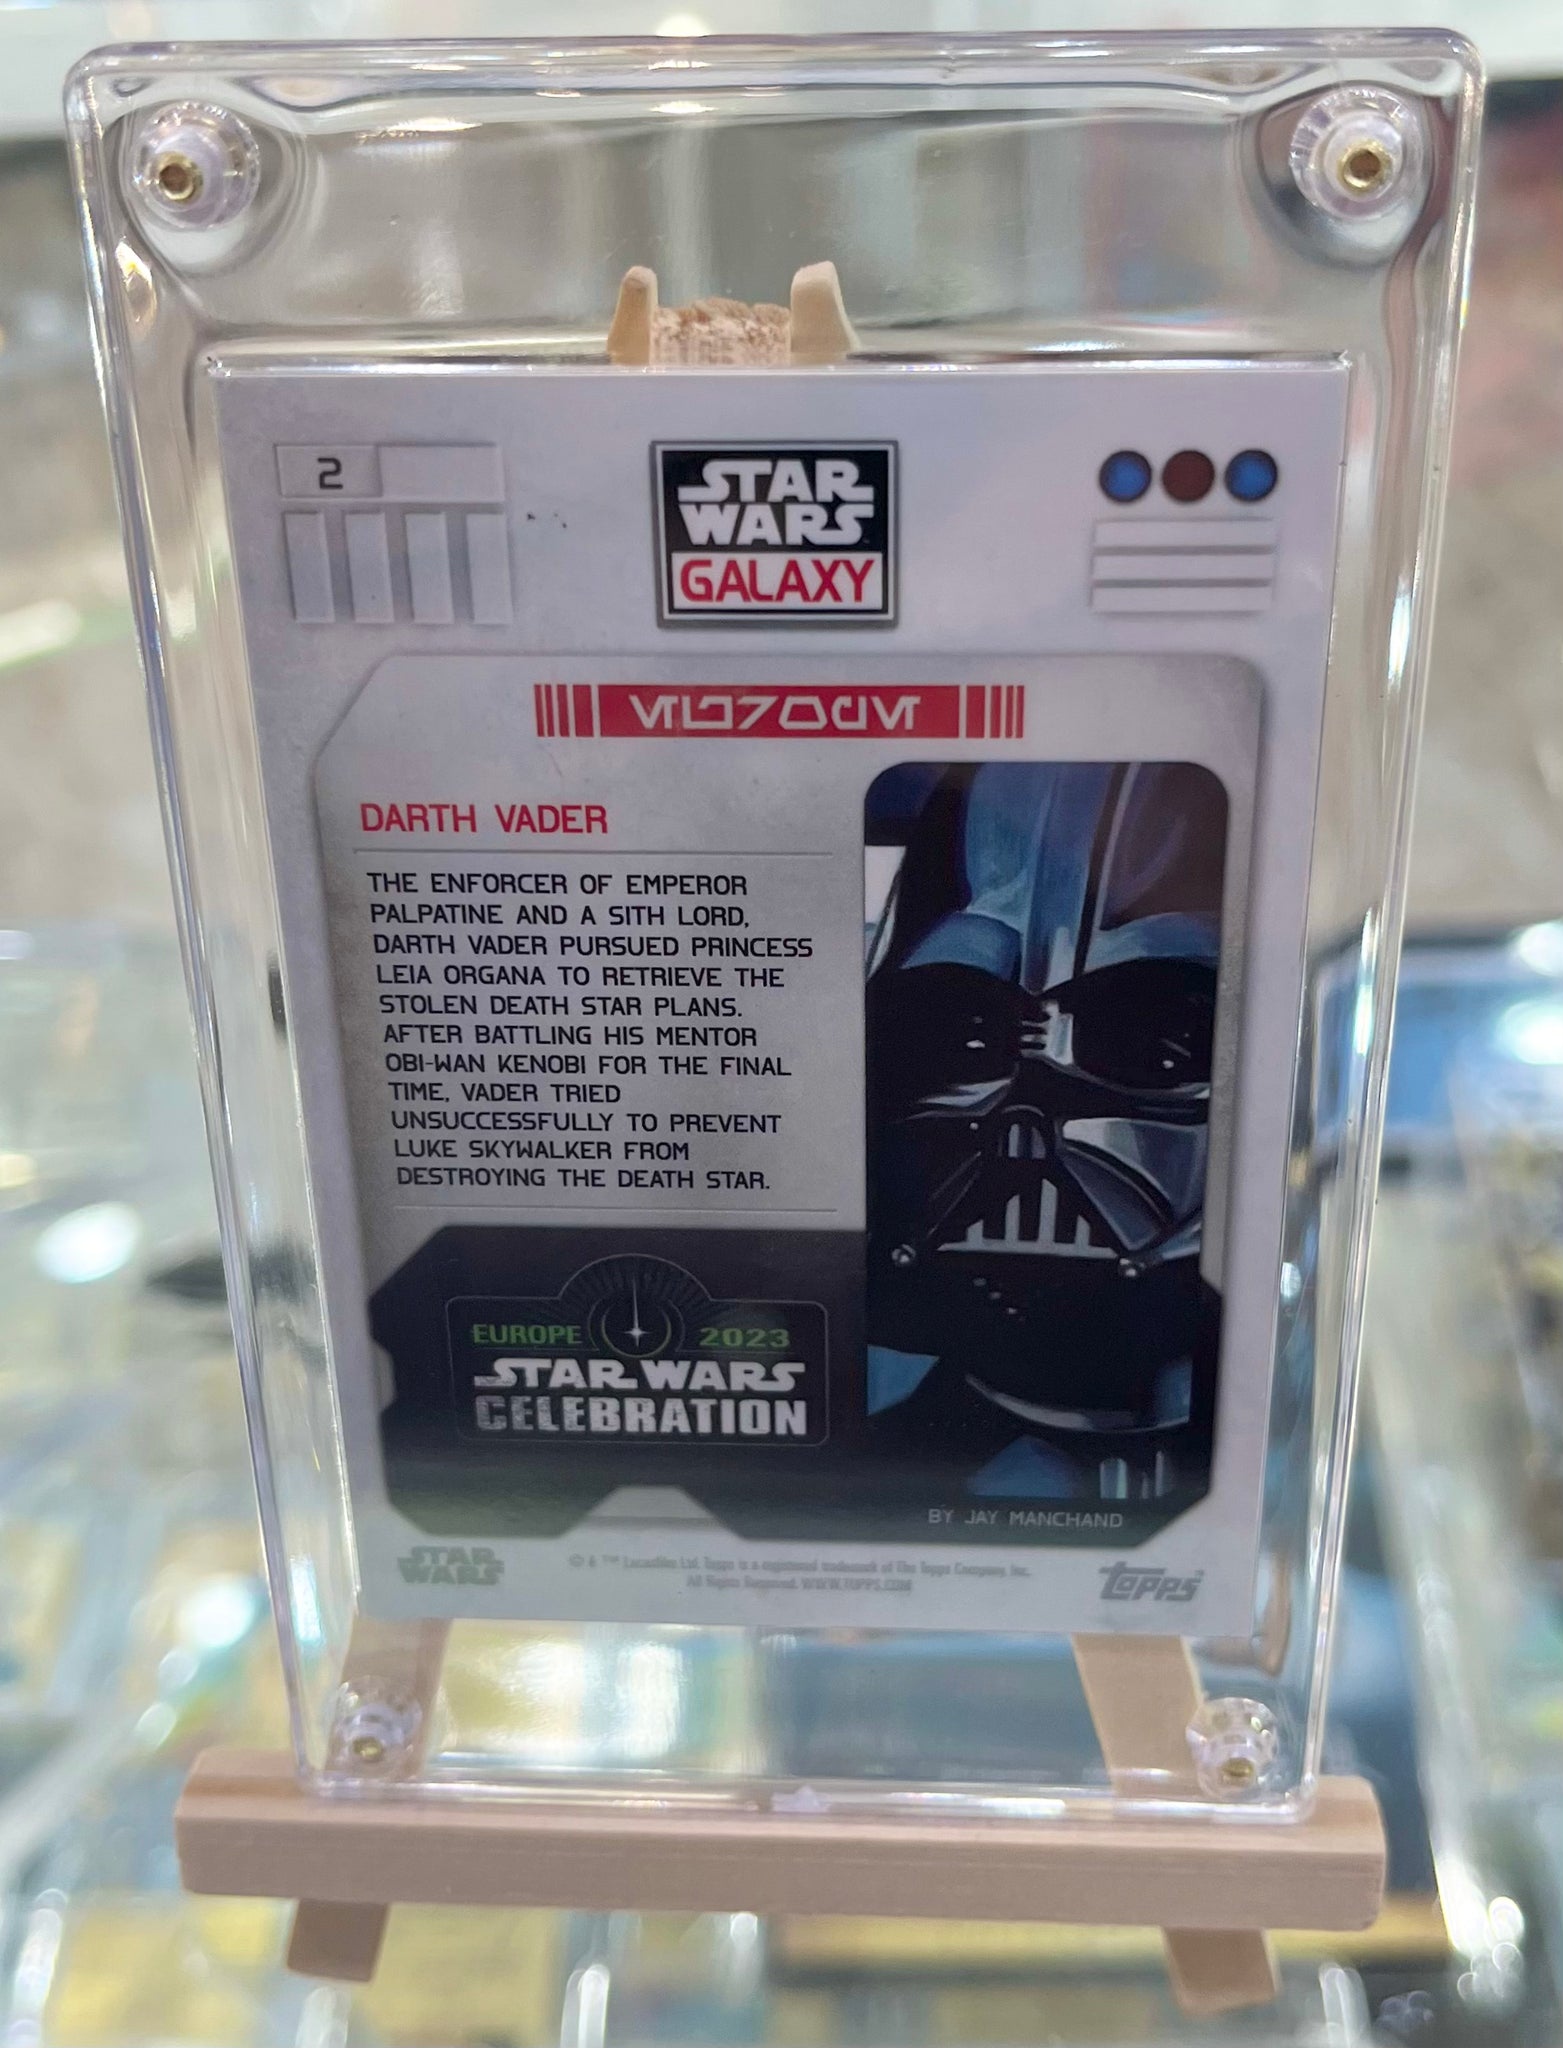 Star Wars Celebration 2023 Exclusive Topps Base Collector Cards - Volume 1 Original Trilogy